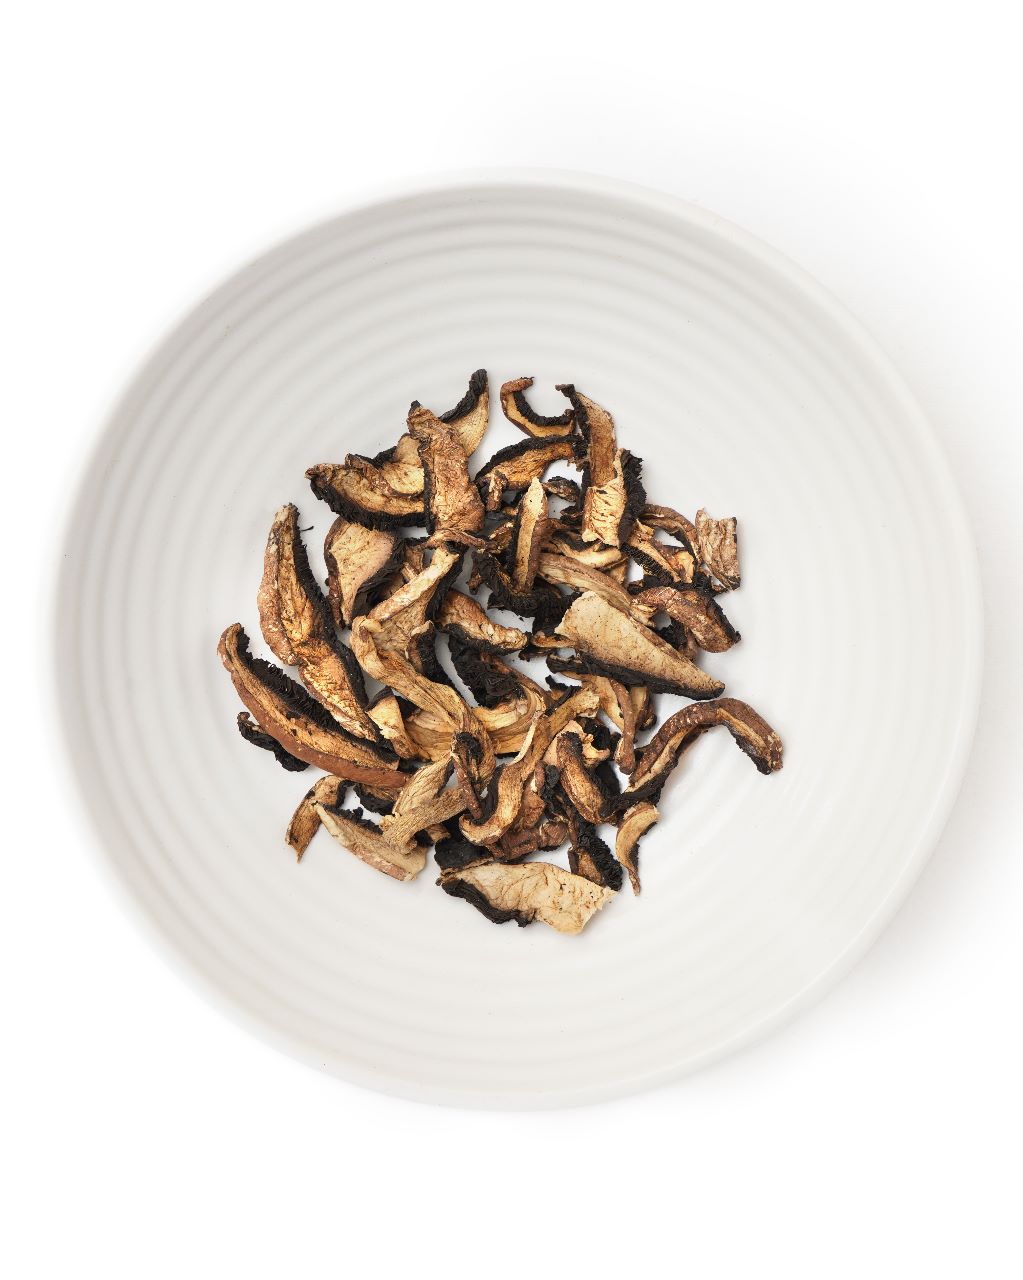 Dry Portobello Mushrooms (Sliced)